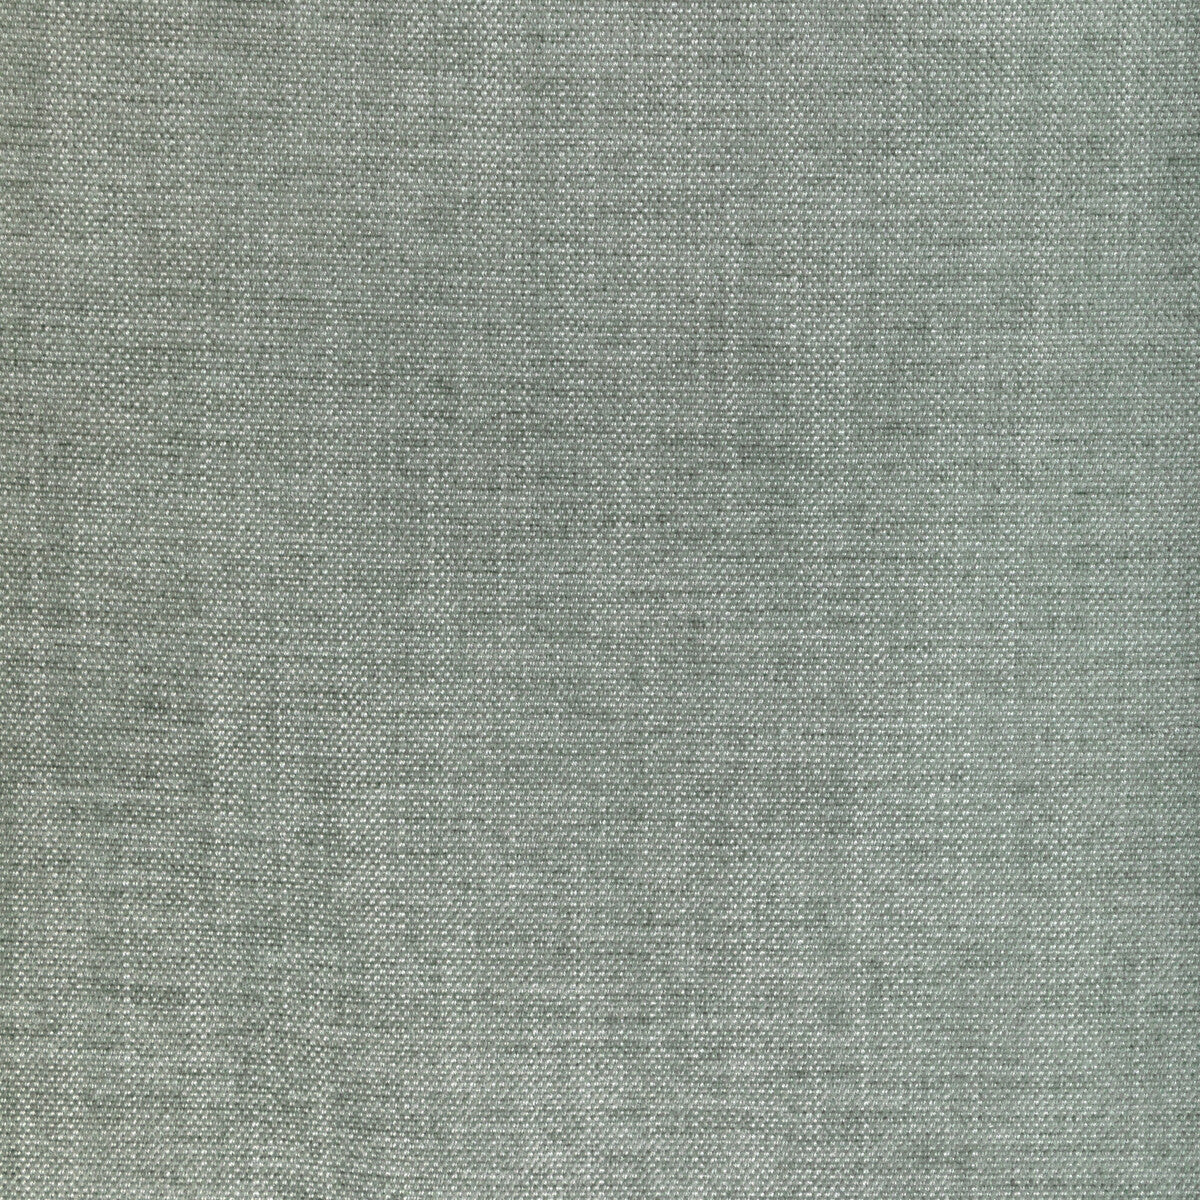 Kravet Smart fabric in 36650-1115 color - pattern 36650.1115.0 - by Kravet Smart in the Performance Kravetarmor collection